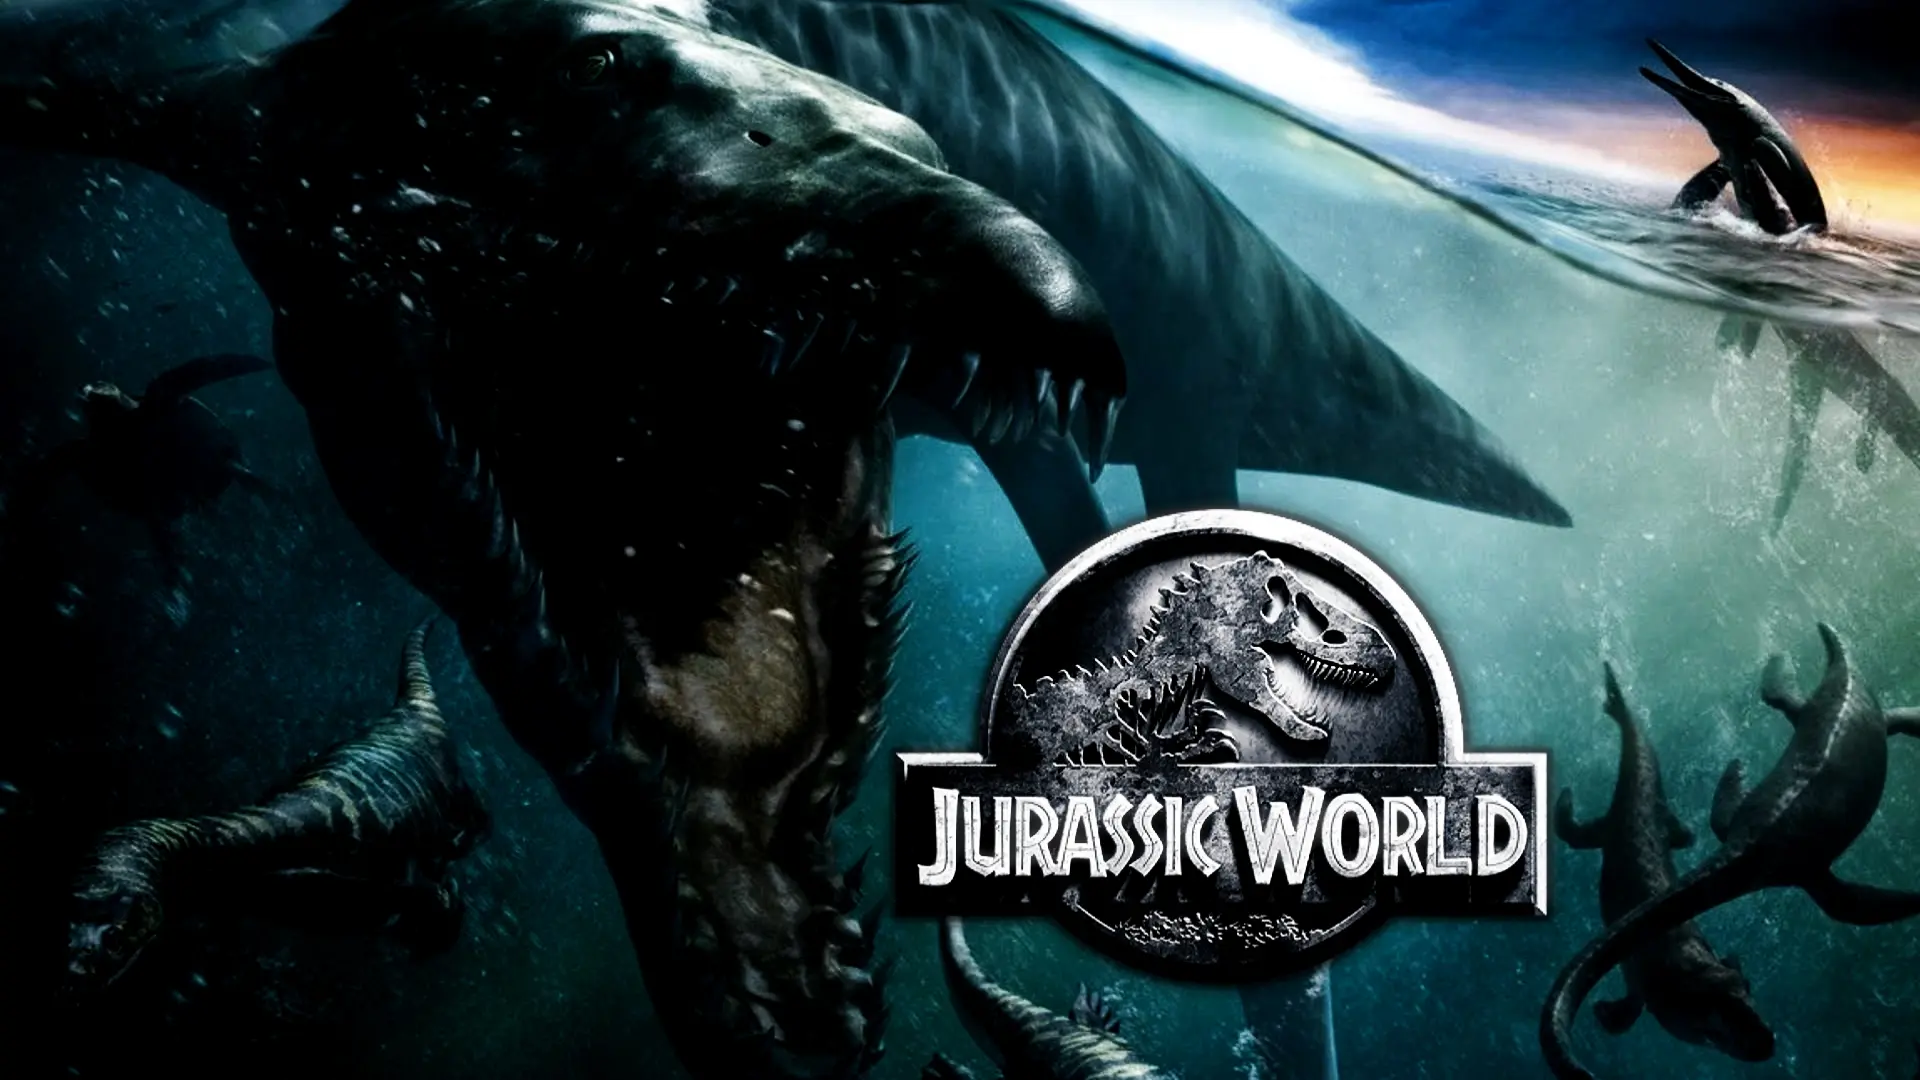 Movie Jurassic World wallpaper 5 | Background Image